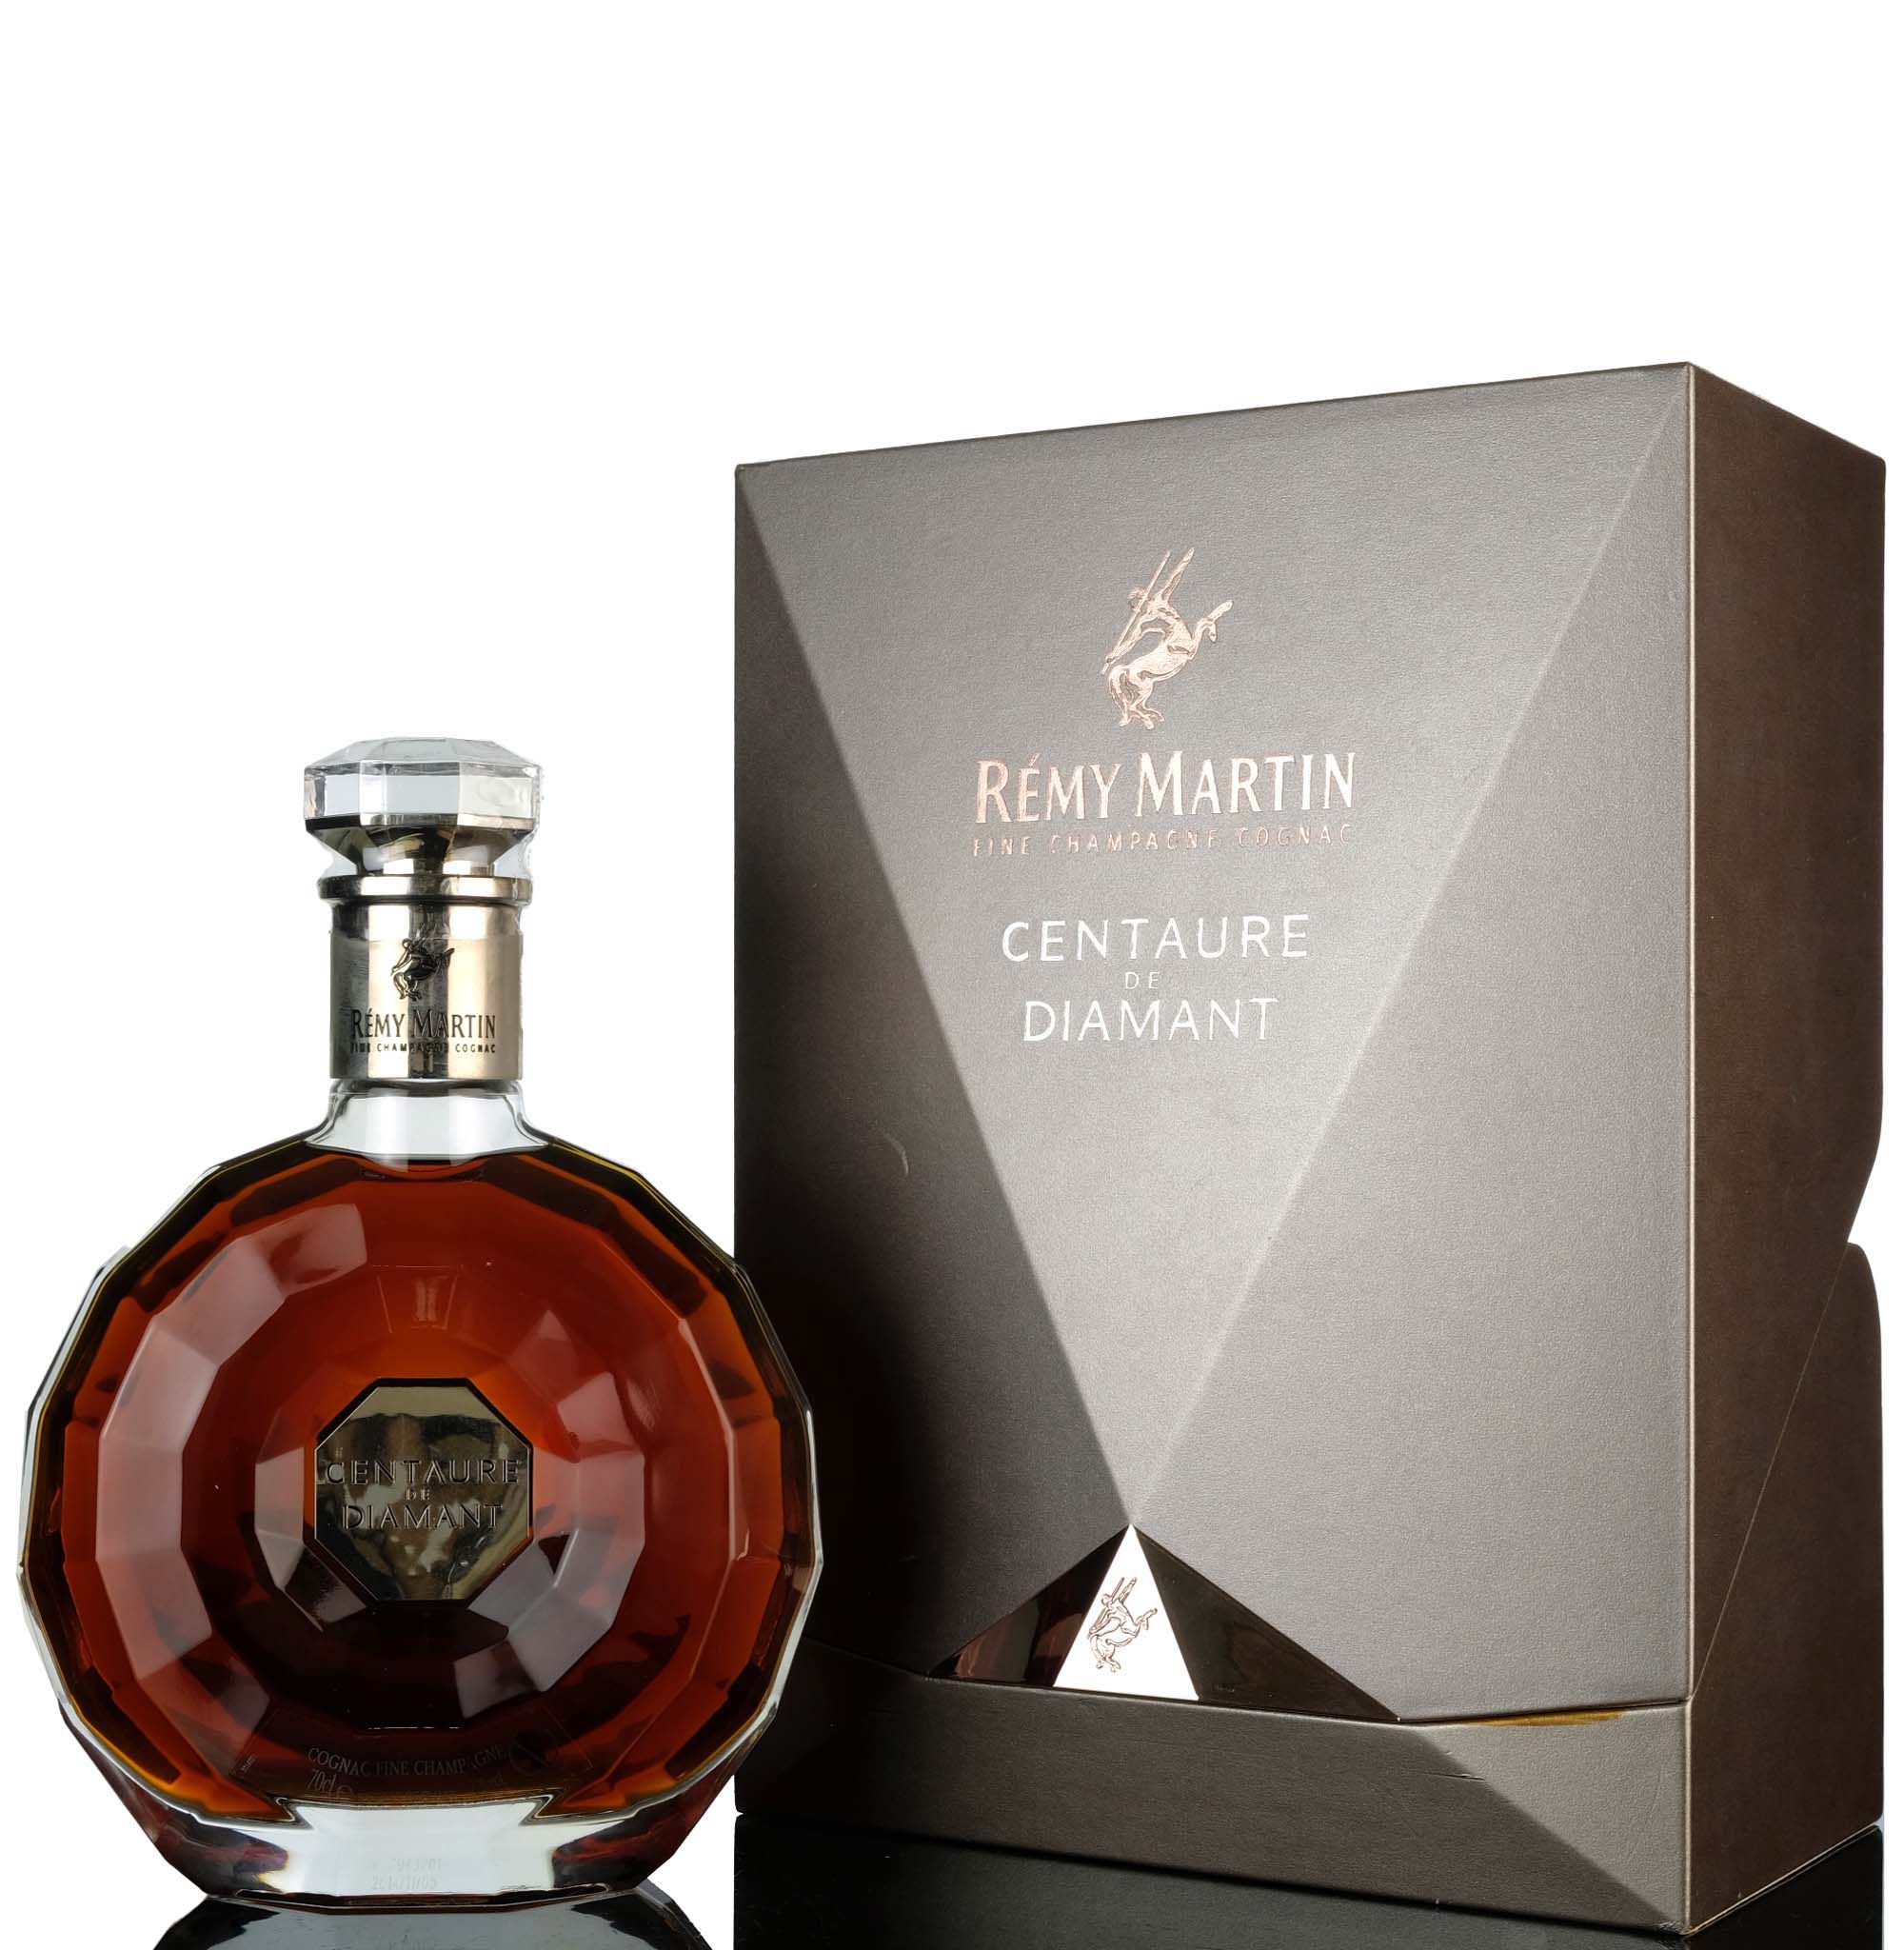 Remy Martin Centaure De Diamant Fine Champagne Cognac - 2014 Release